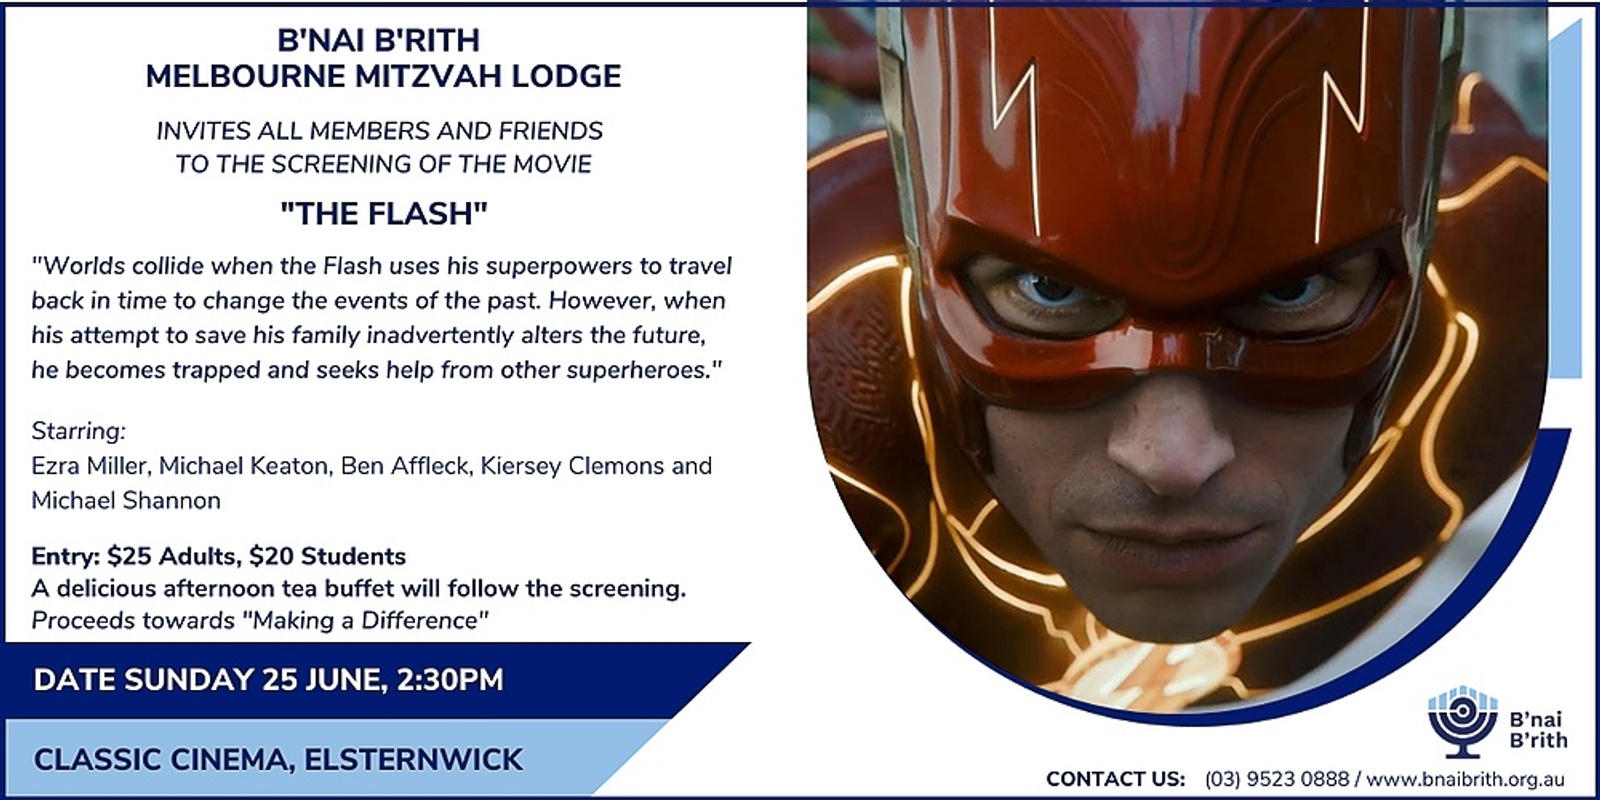 Melbourne Mitzvah Lodge - The Flash Movie